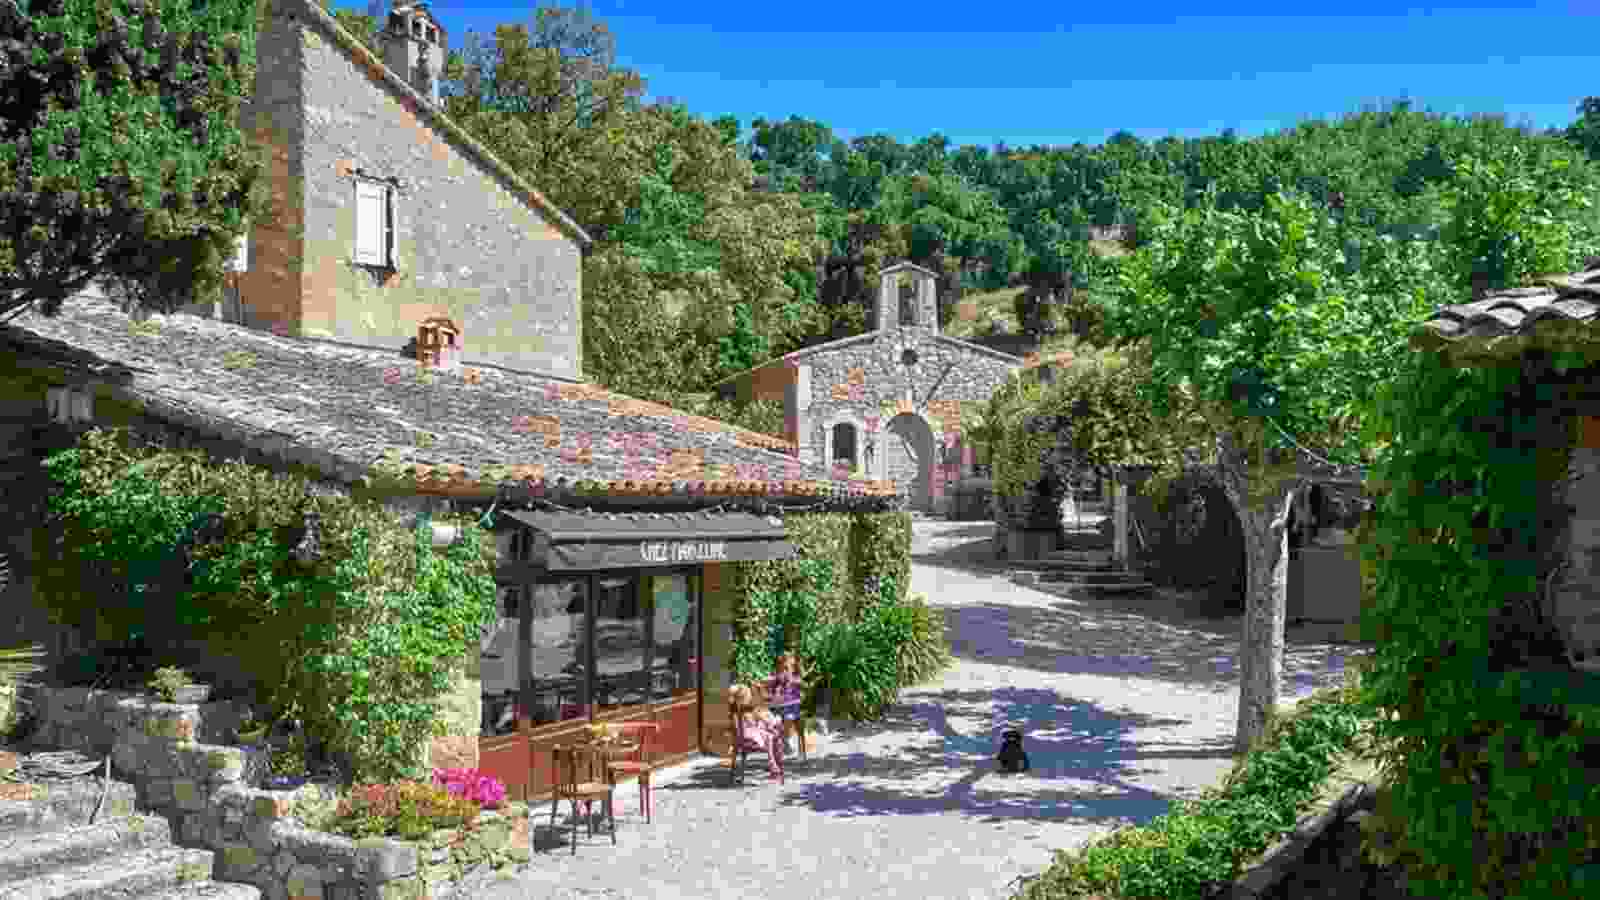 Depp's French Village